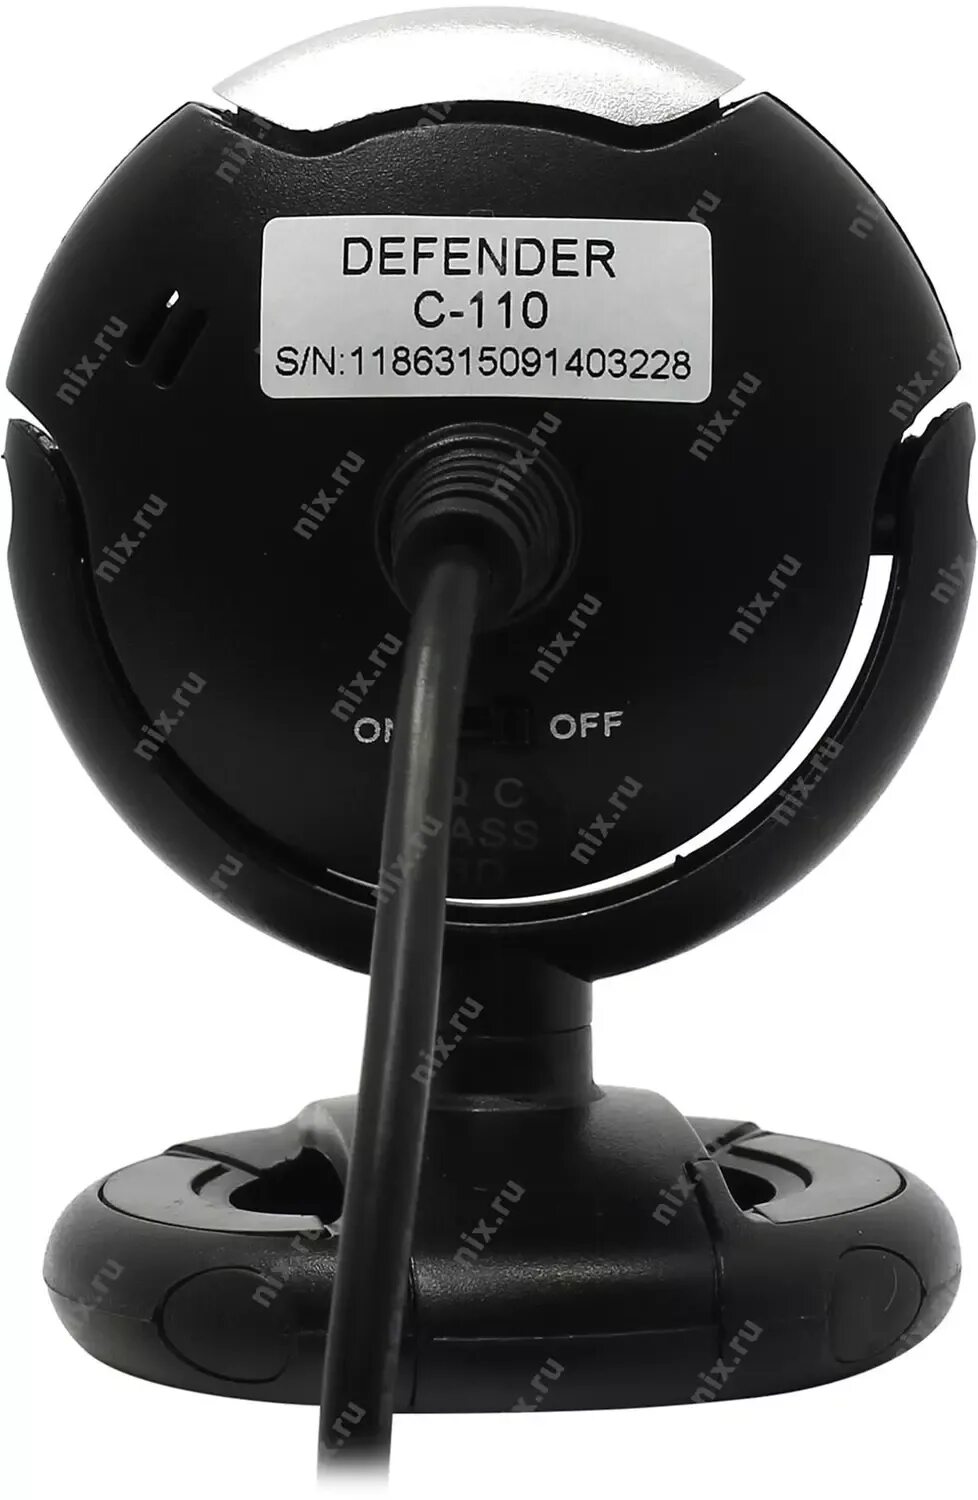 Defender c 110. Web-камера Defender c-110. Веб-камера Defender c-110 (USB2.0, 640x480, микрофон, подсветка). Веб камера Дефендер с 110. Веб-камера Defender c-110 (63110).